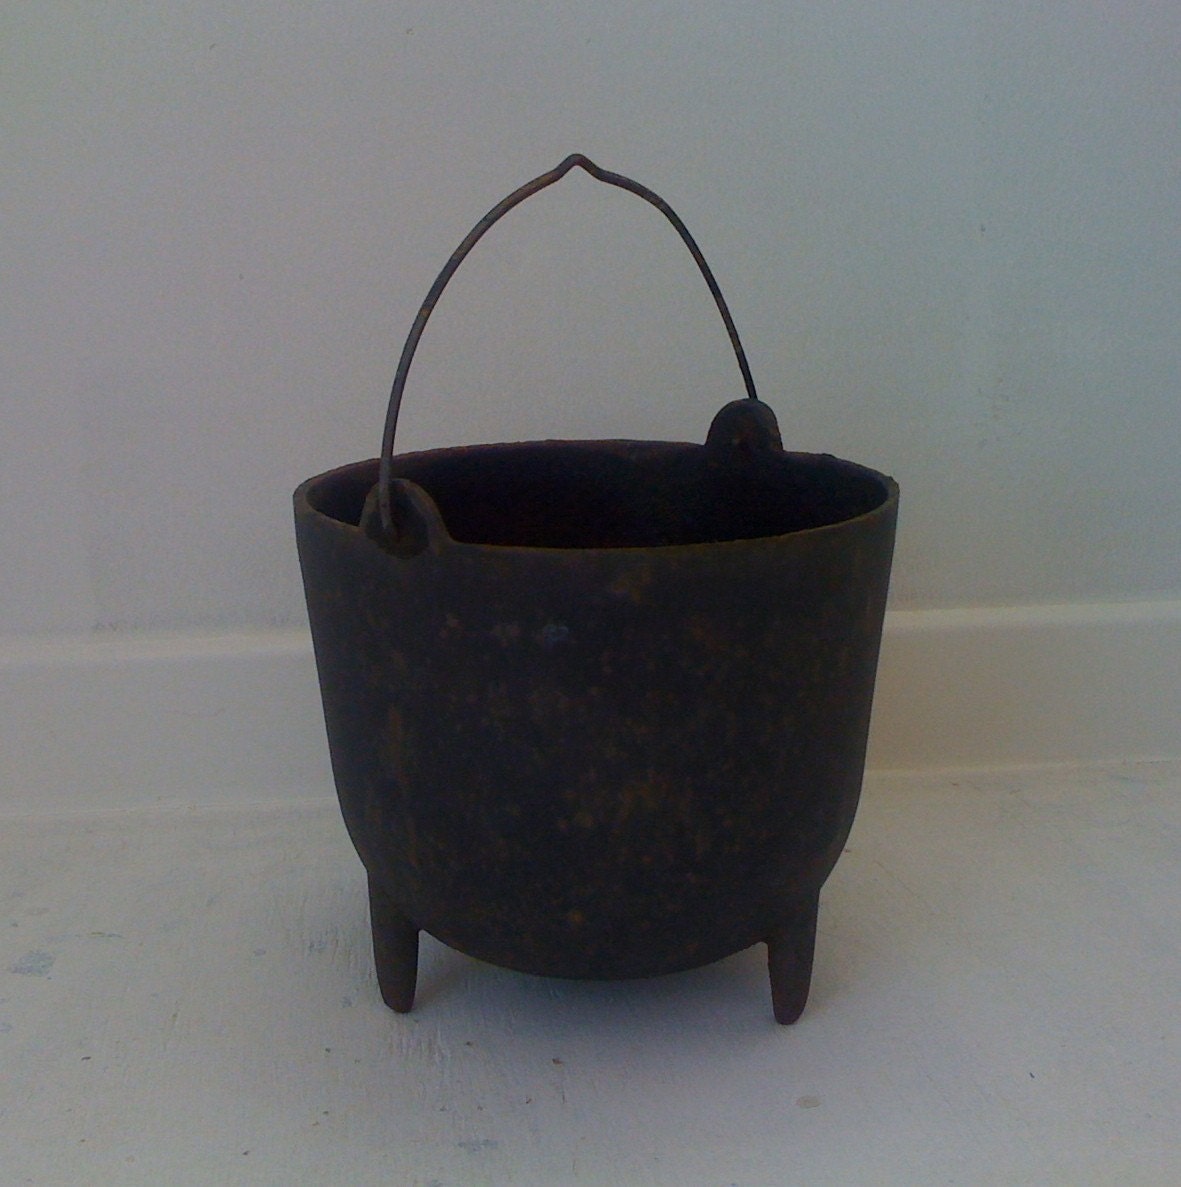 Vintage Antique 1920s Rustic Cast Iron Bale Handled Footed Pot/ Old Cauldron-Primitive ART - VintageButterflyRae